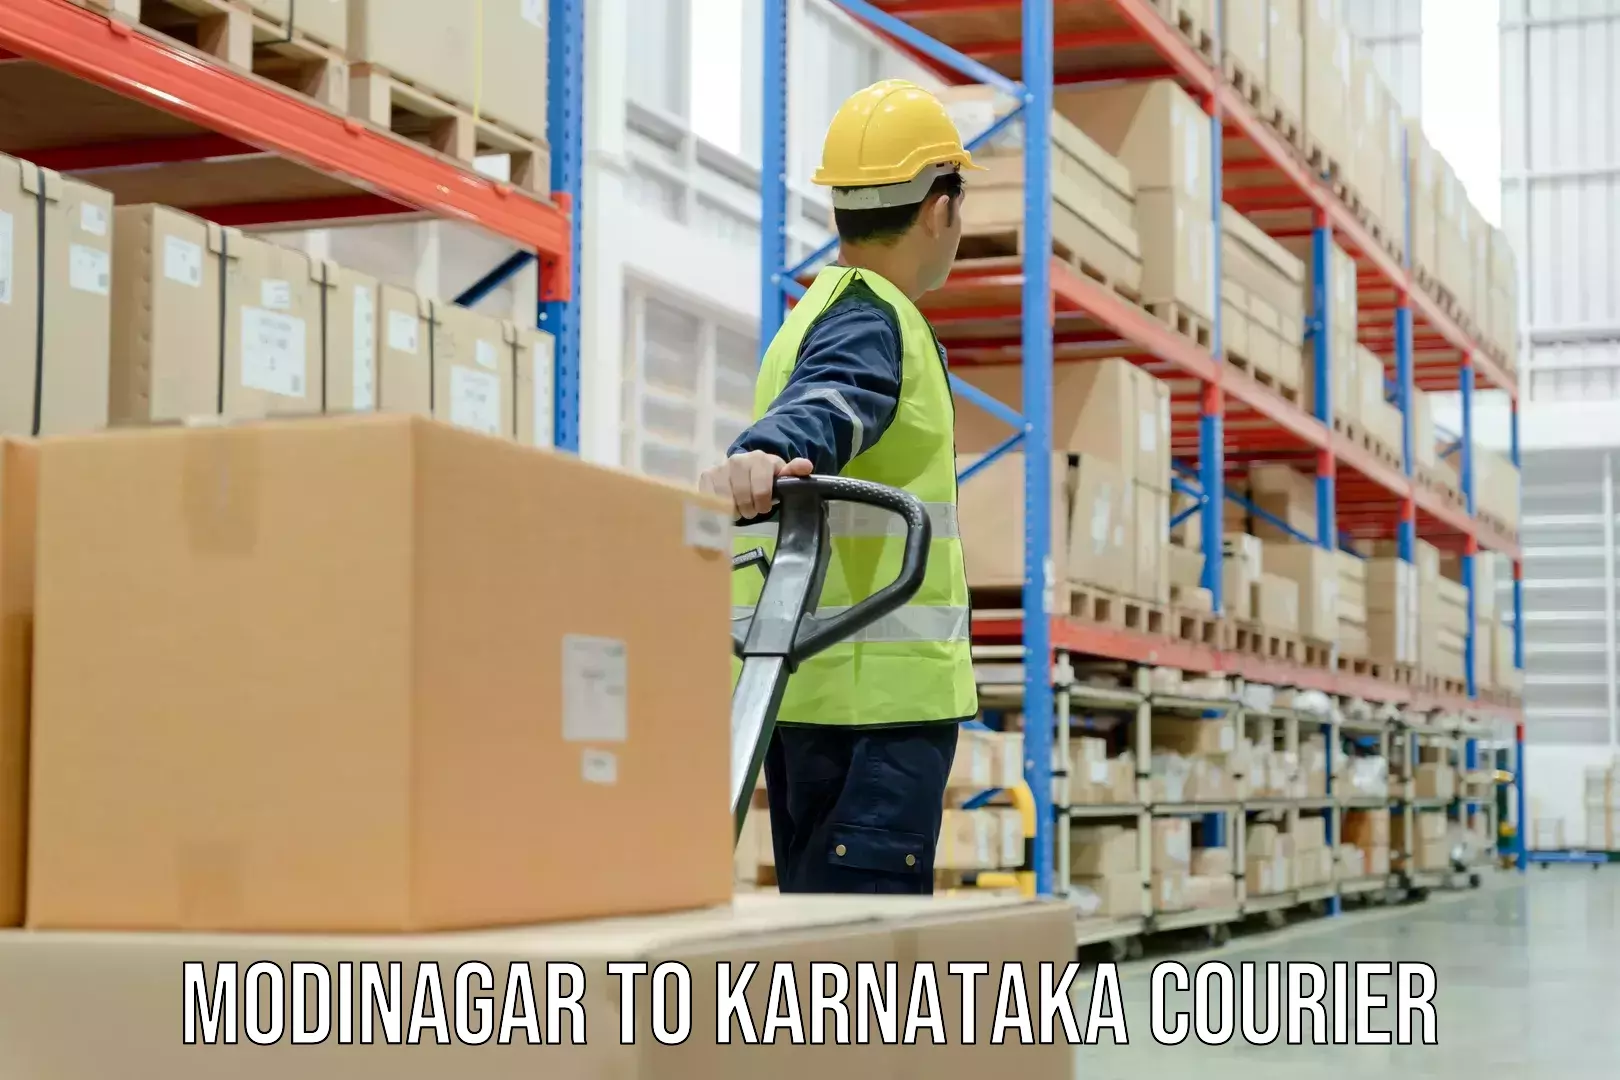 Local delivery service Modinagar to Karnataka